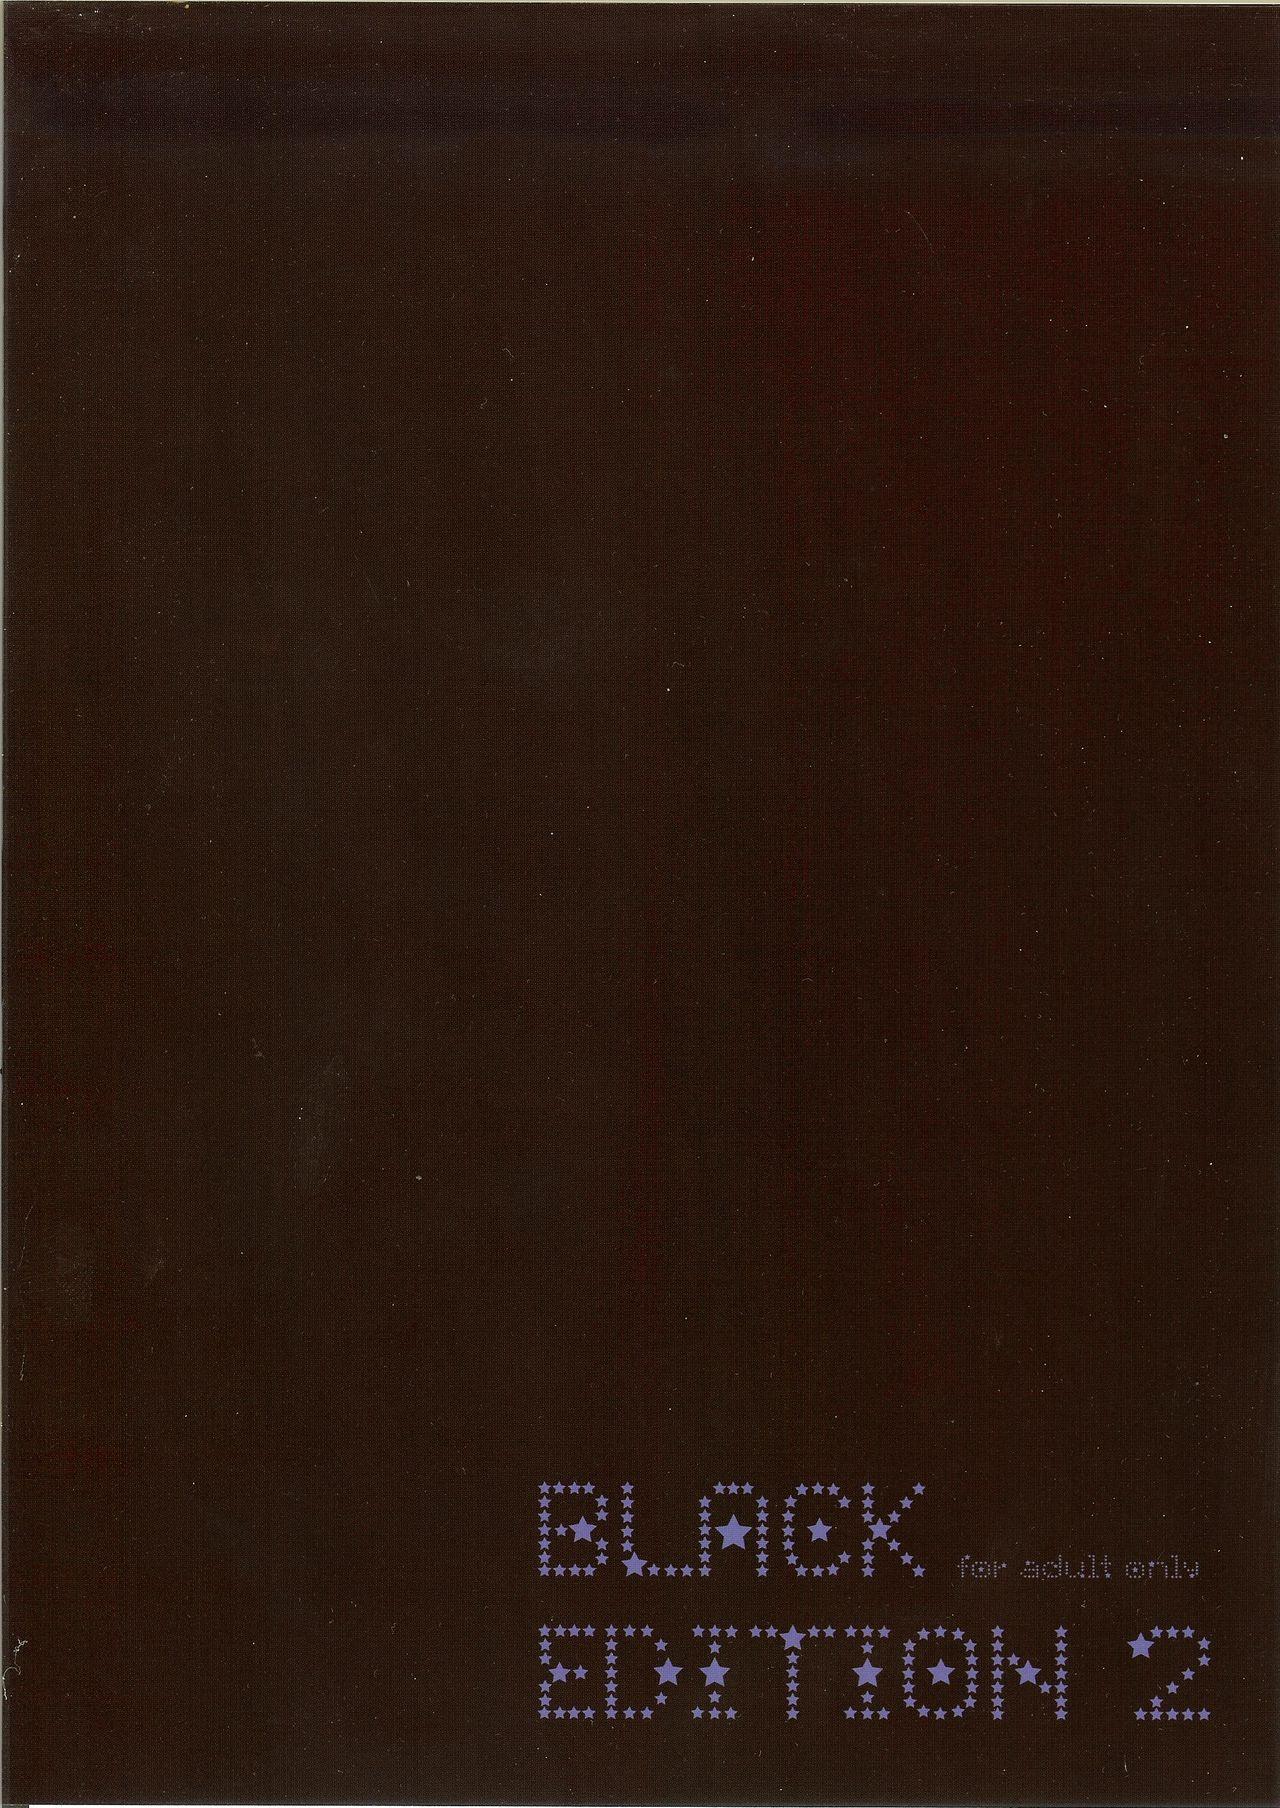 BLACK EDITION 2 16